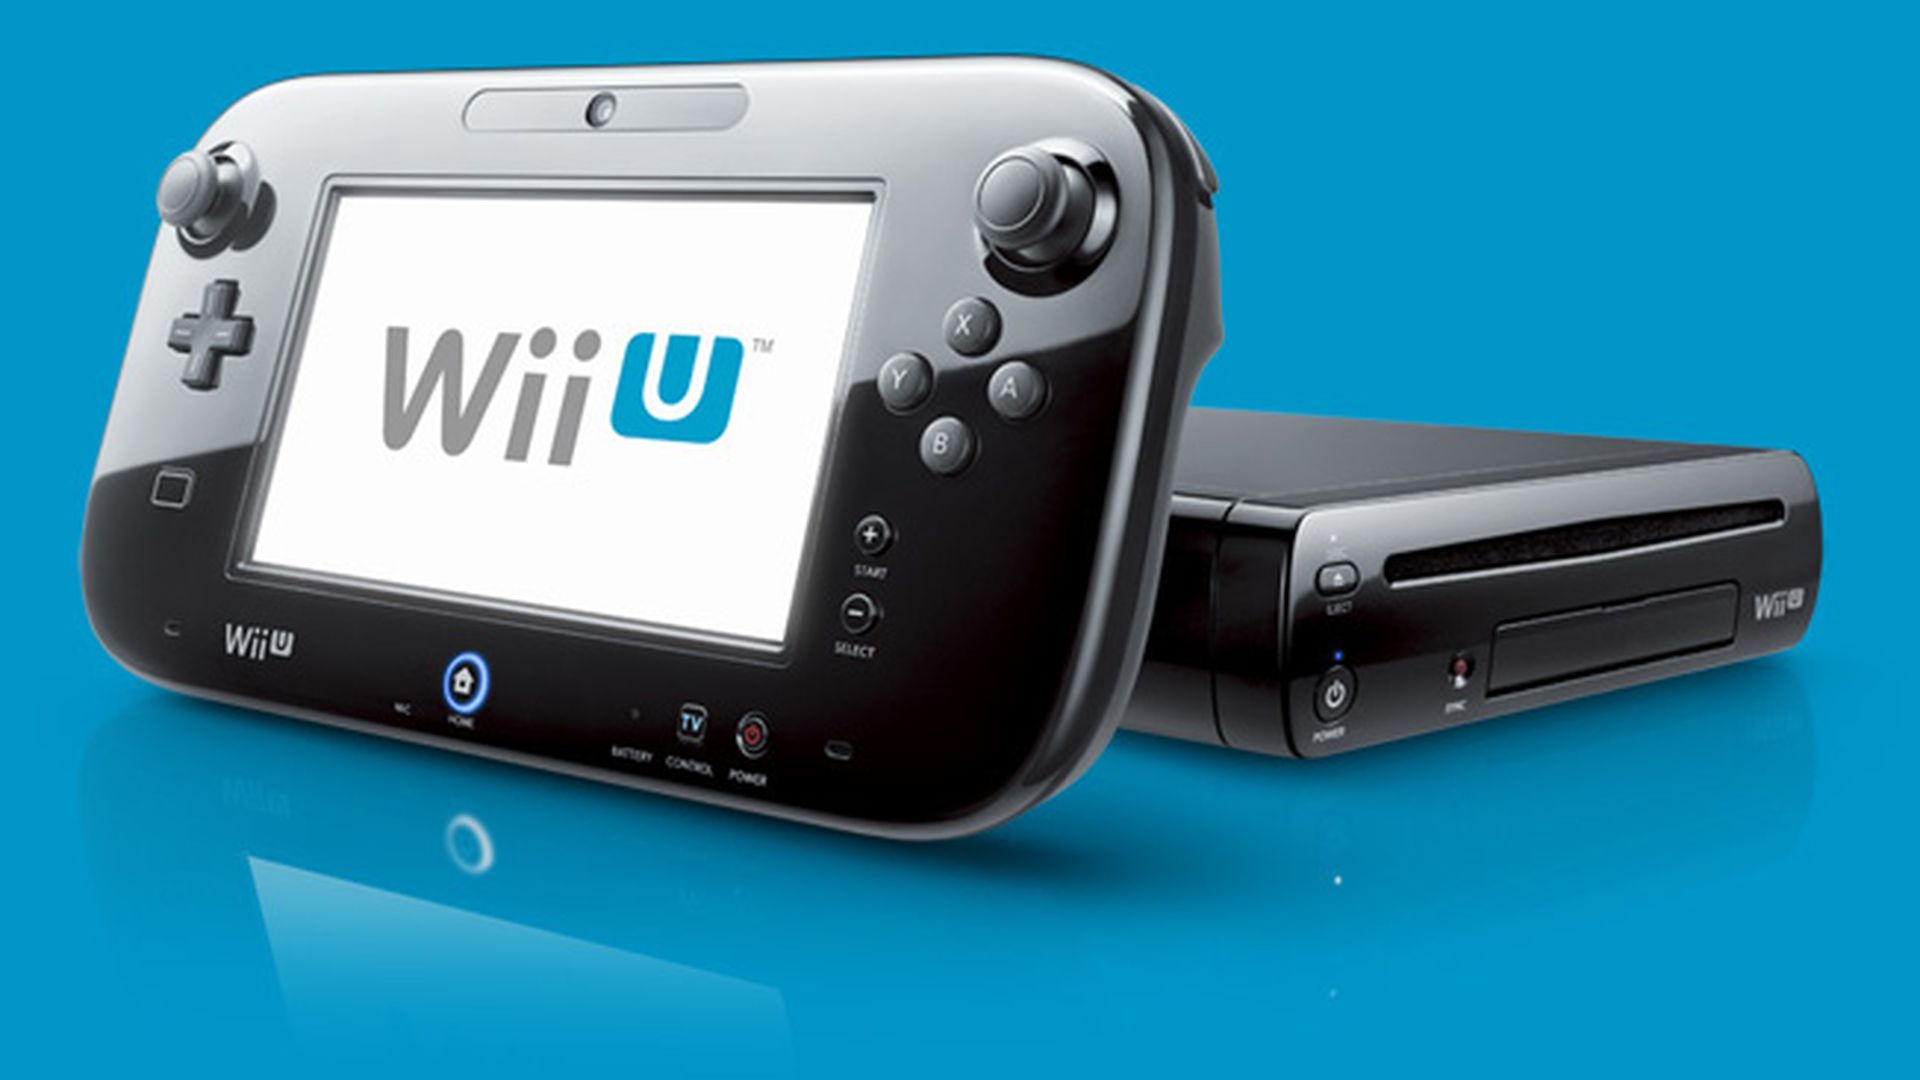 Spreekwoord Zeeziekte Samuel Wii, Wii U, and DS Websites Taken Down By Nintendo